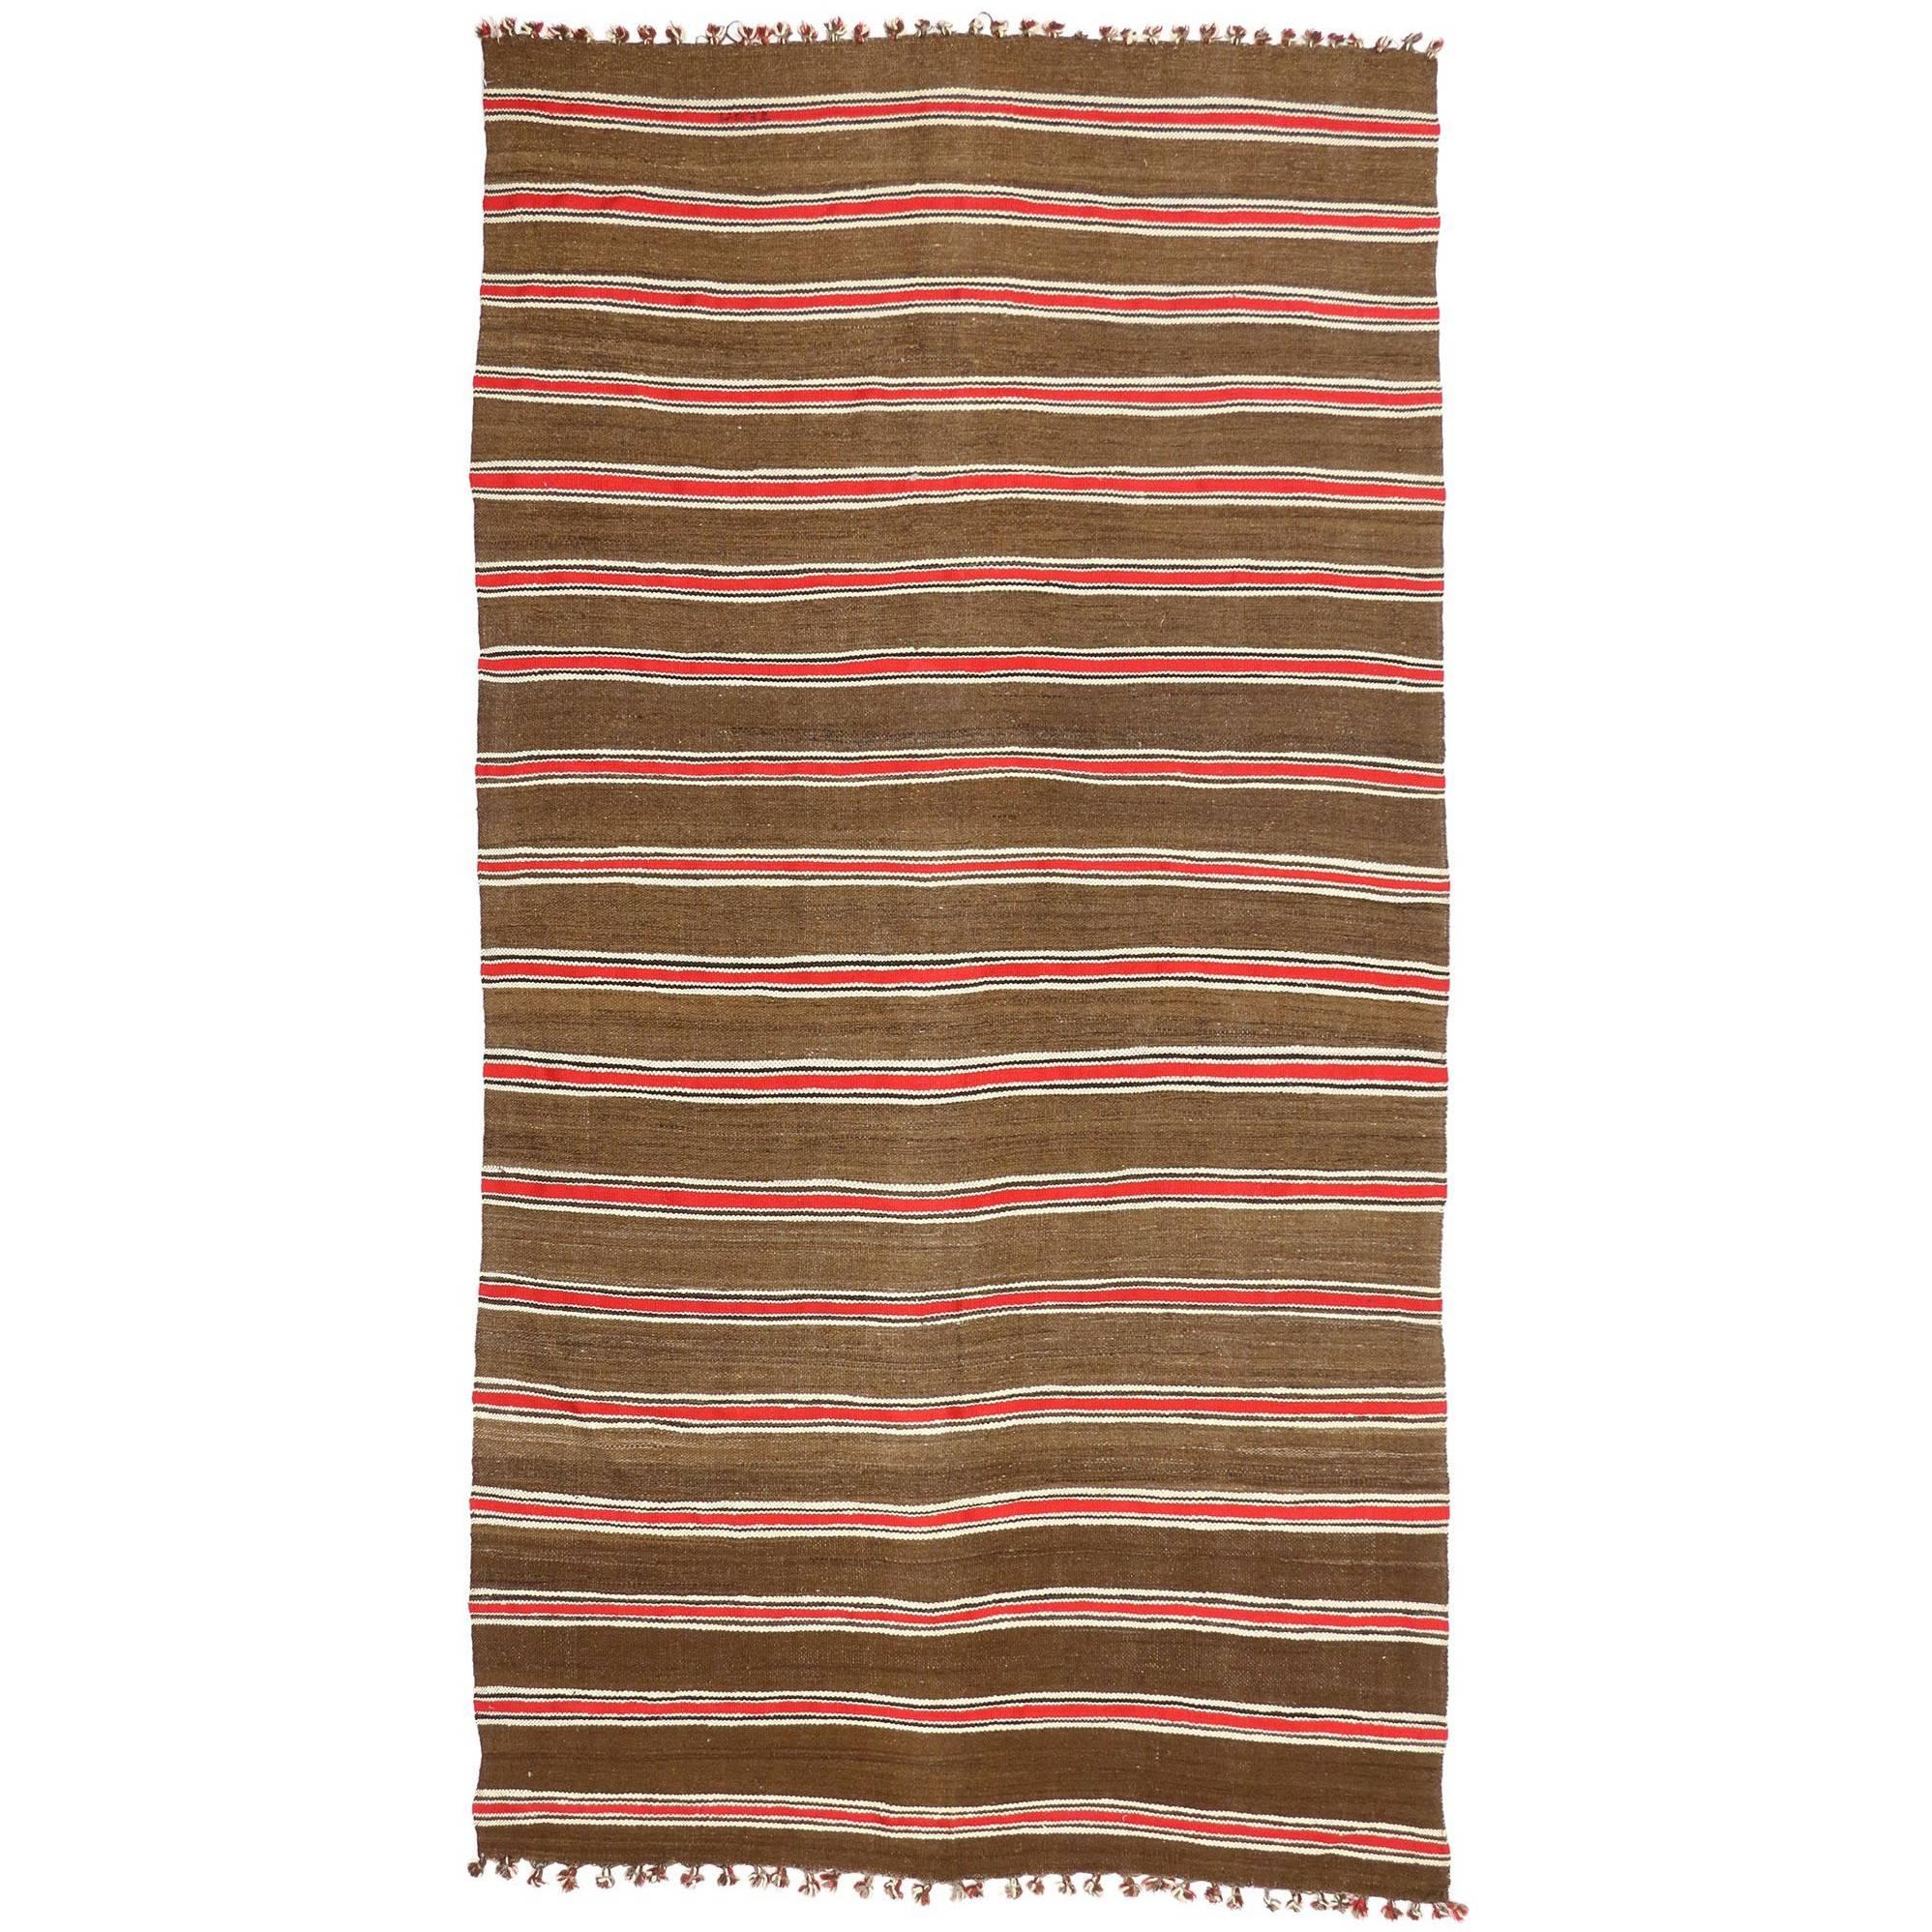 Vintage Berber Moroccan Kilim Striped Rug, Wide Hallway Runner with Stripes